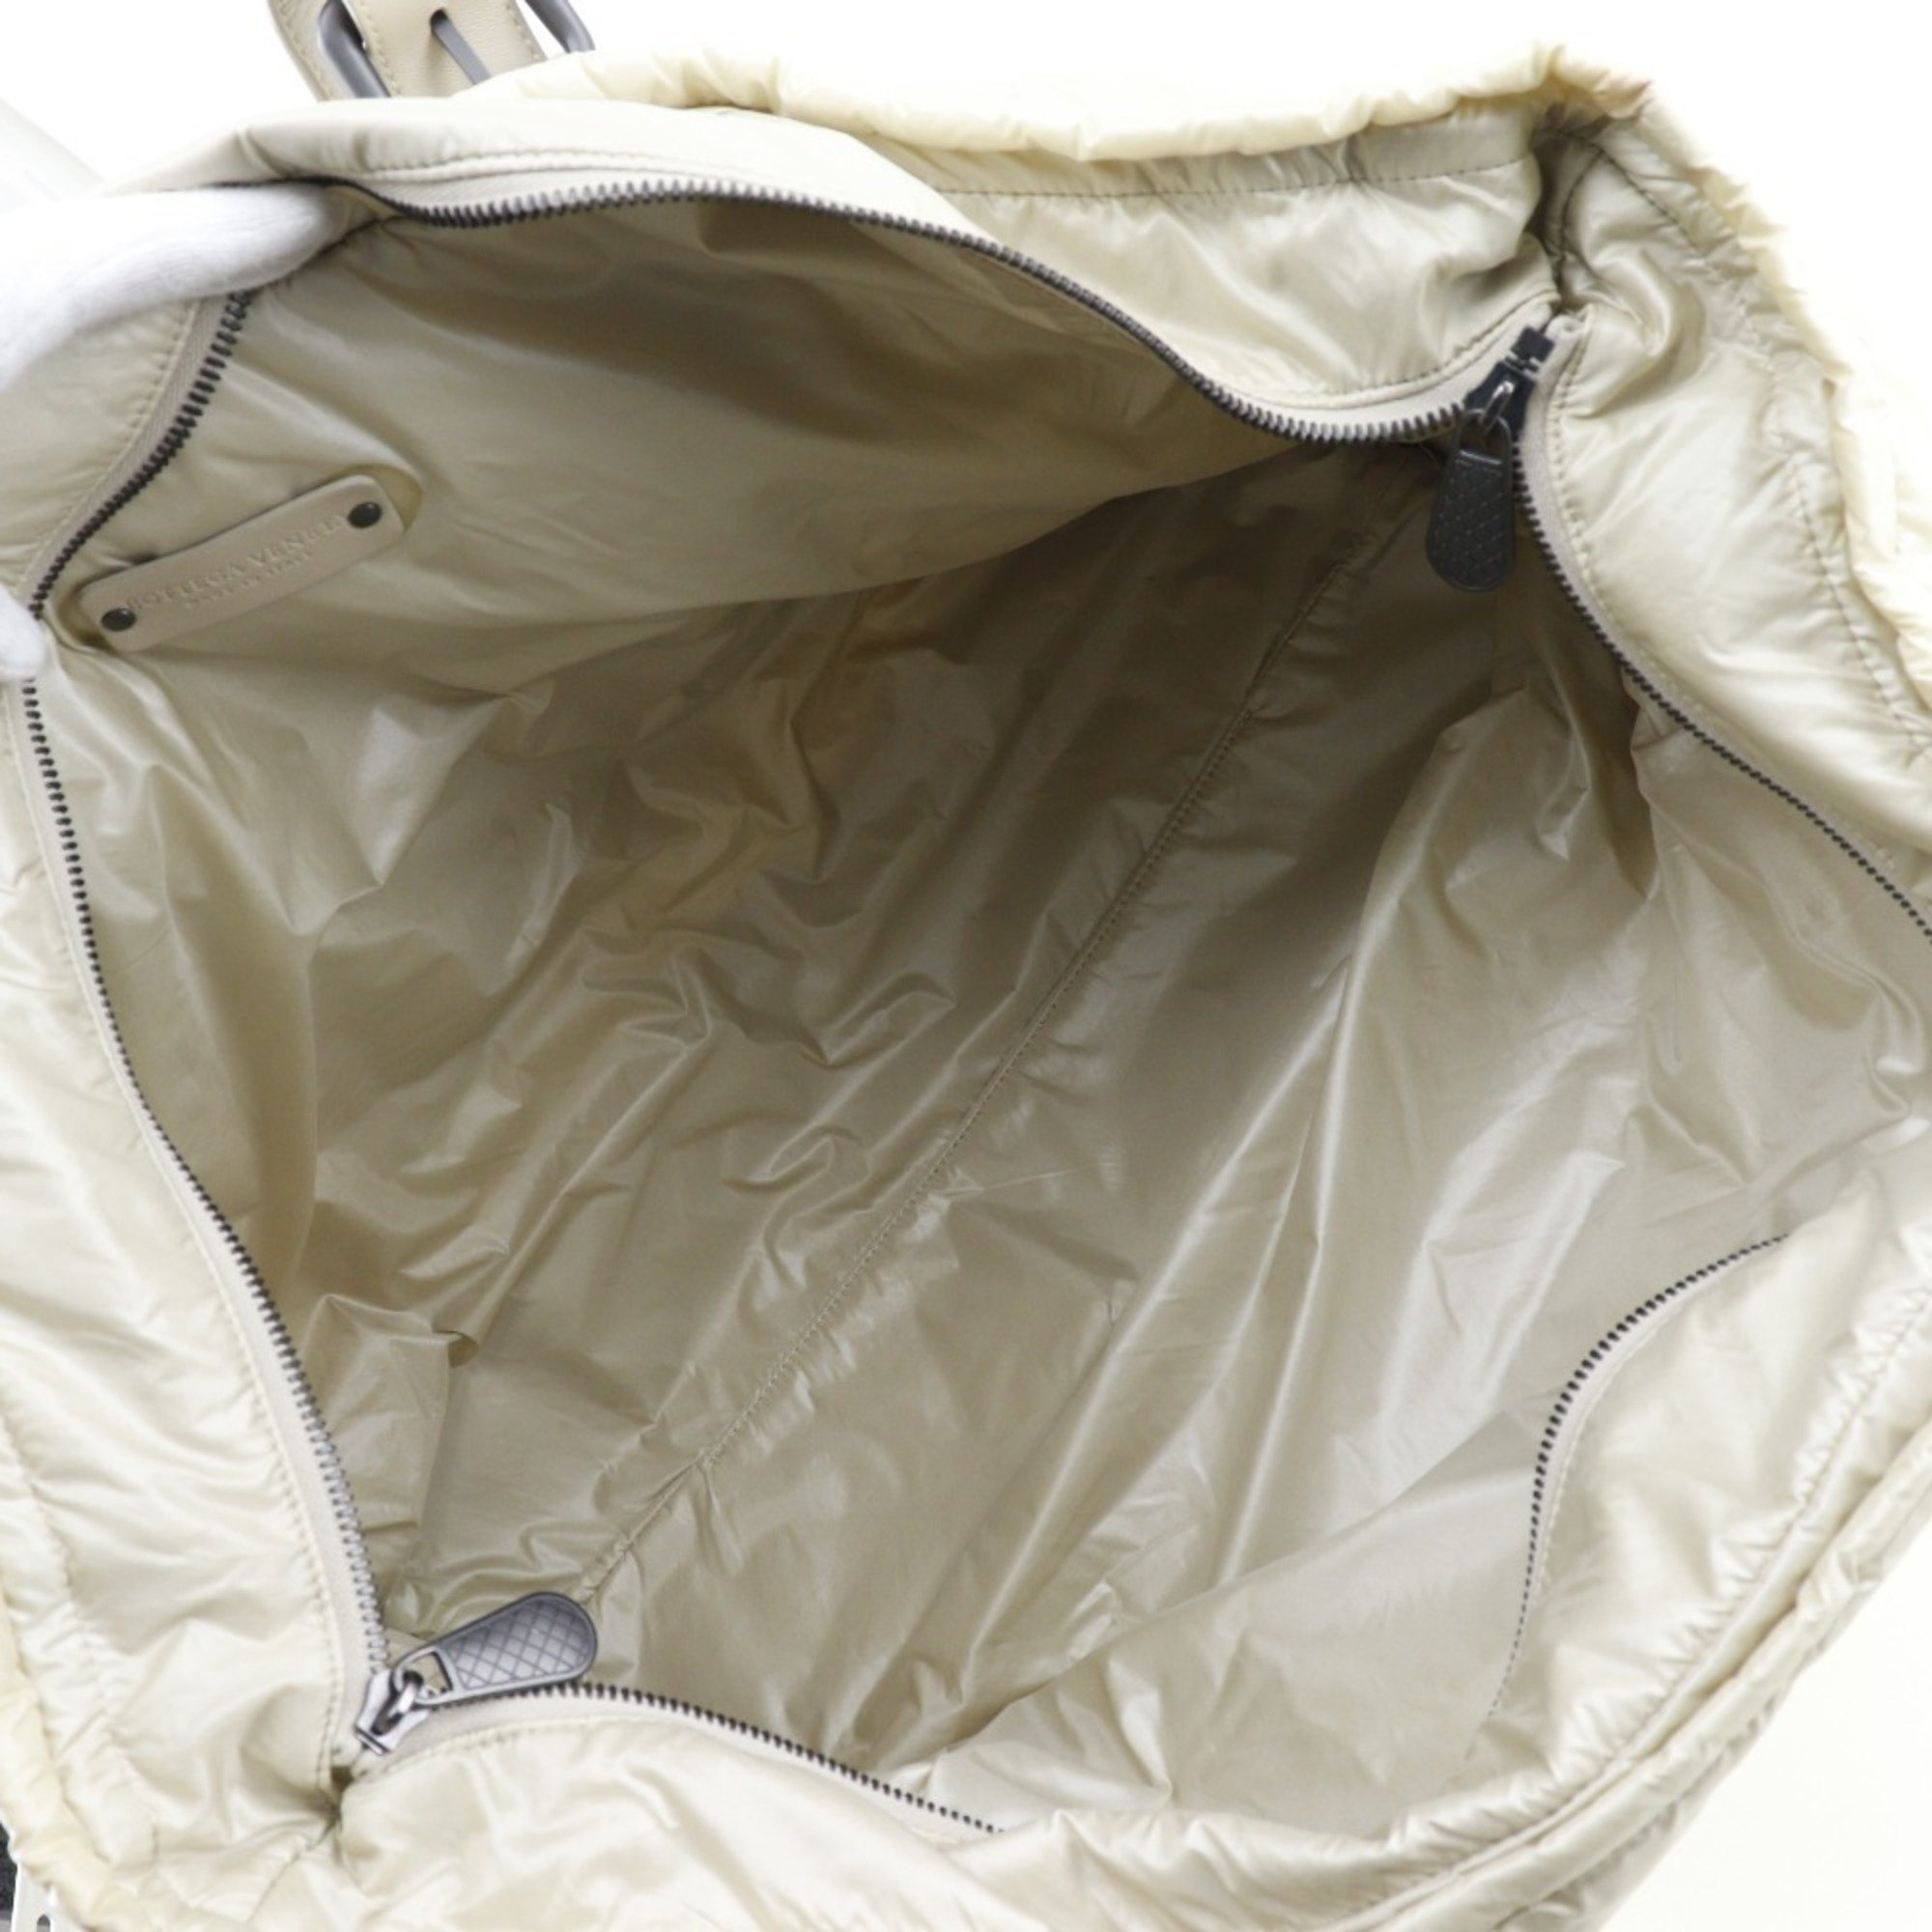 Bottega Veneta BOTTEGAVENETA Spinnaker Tote Bag Intrecciato Nylon Made in Italy Beige Shoulder Handbag A4 Zipper Women's